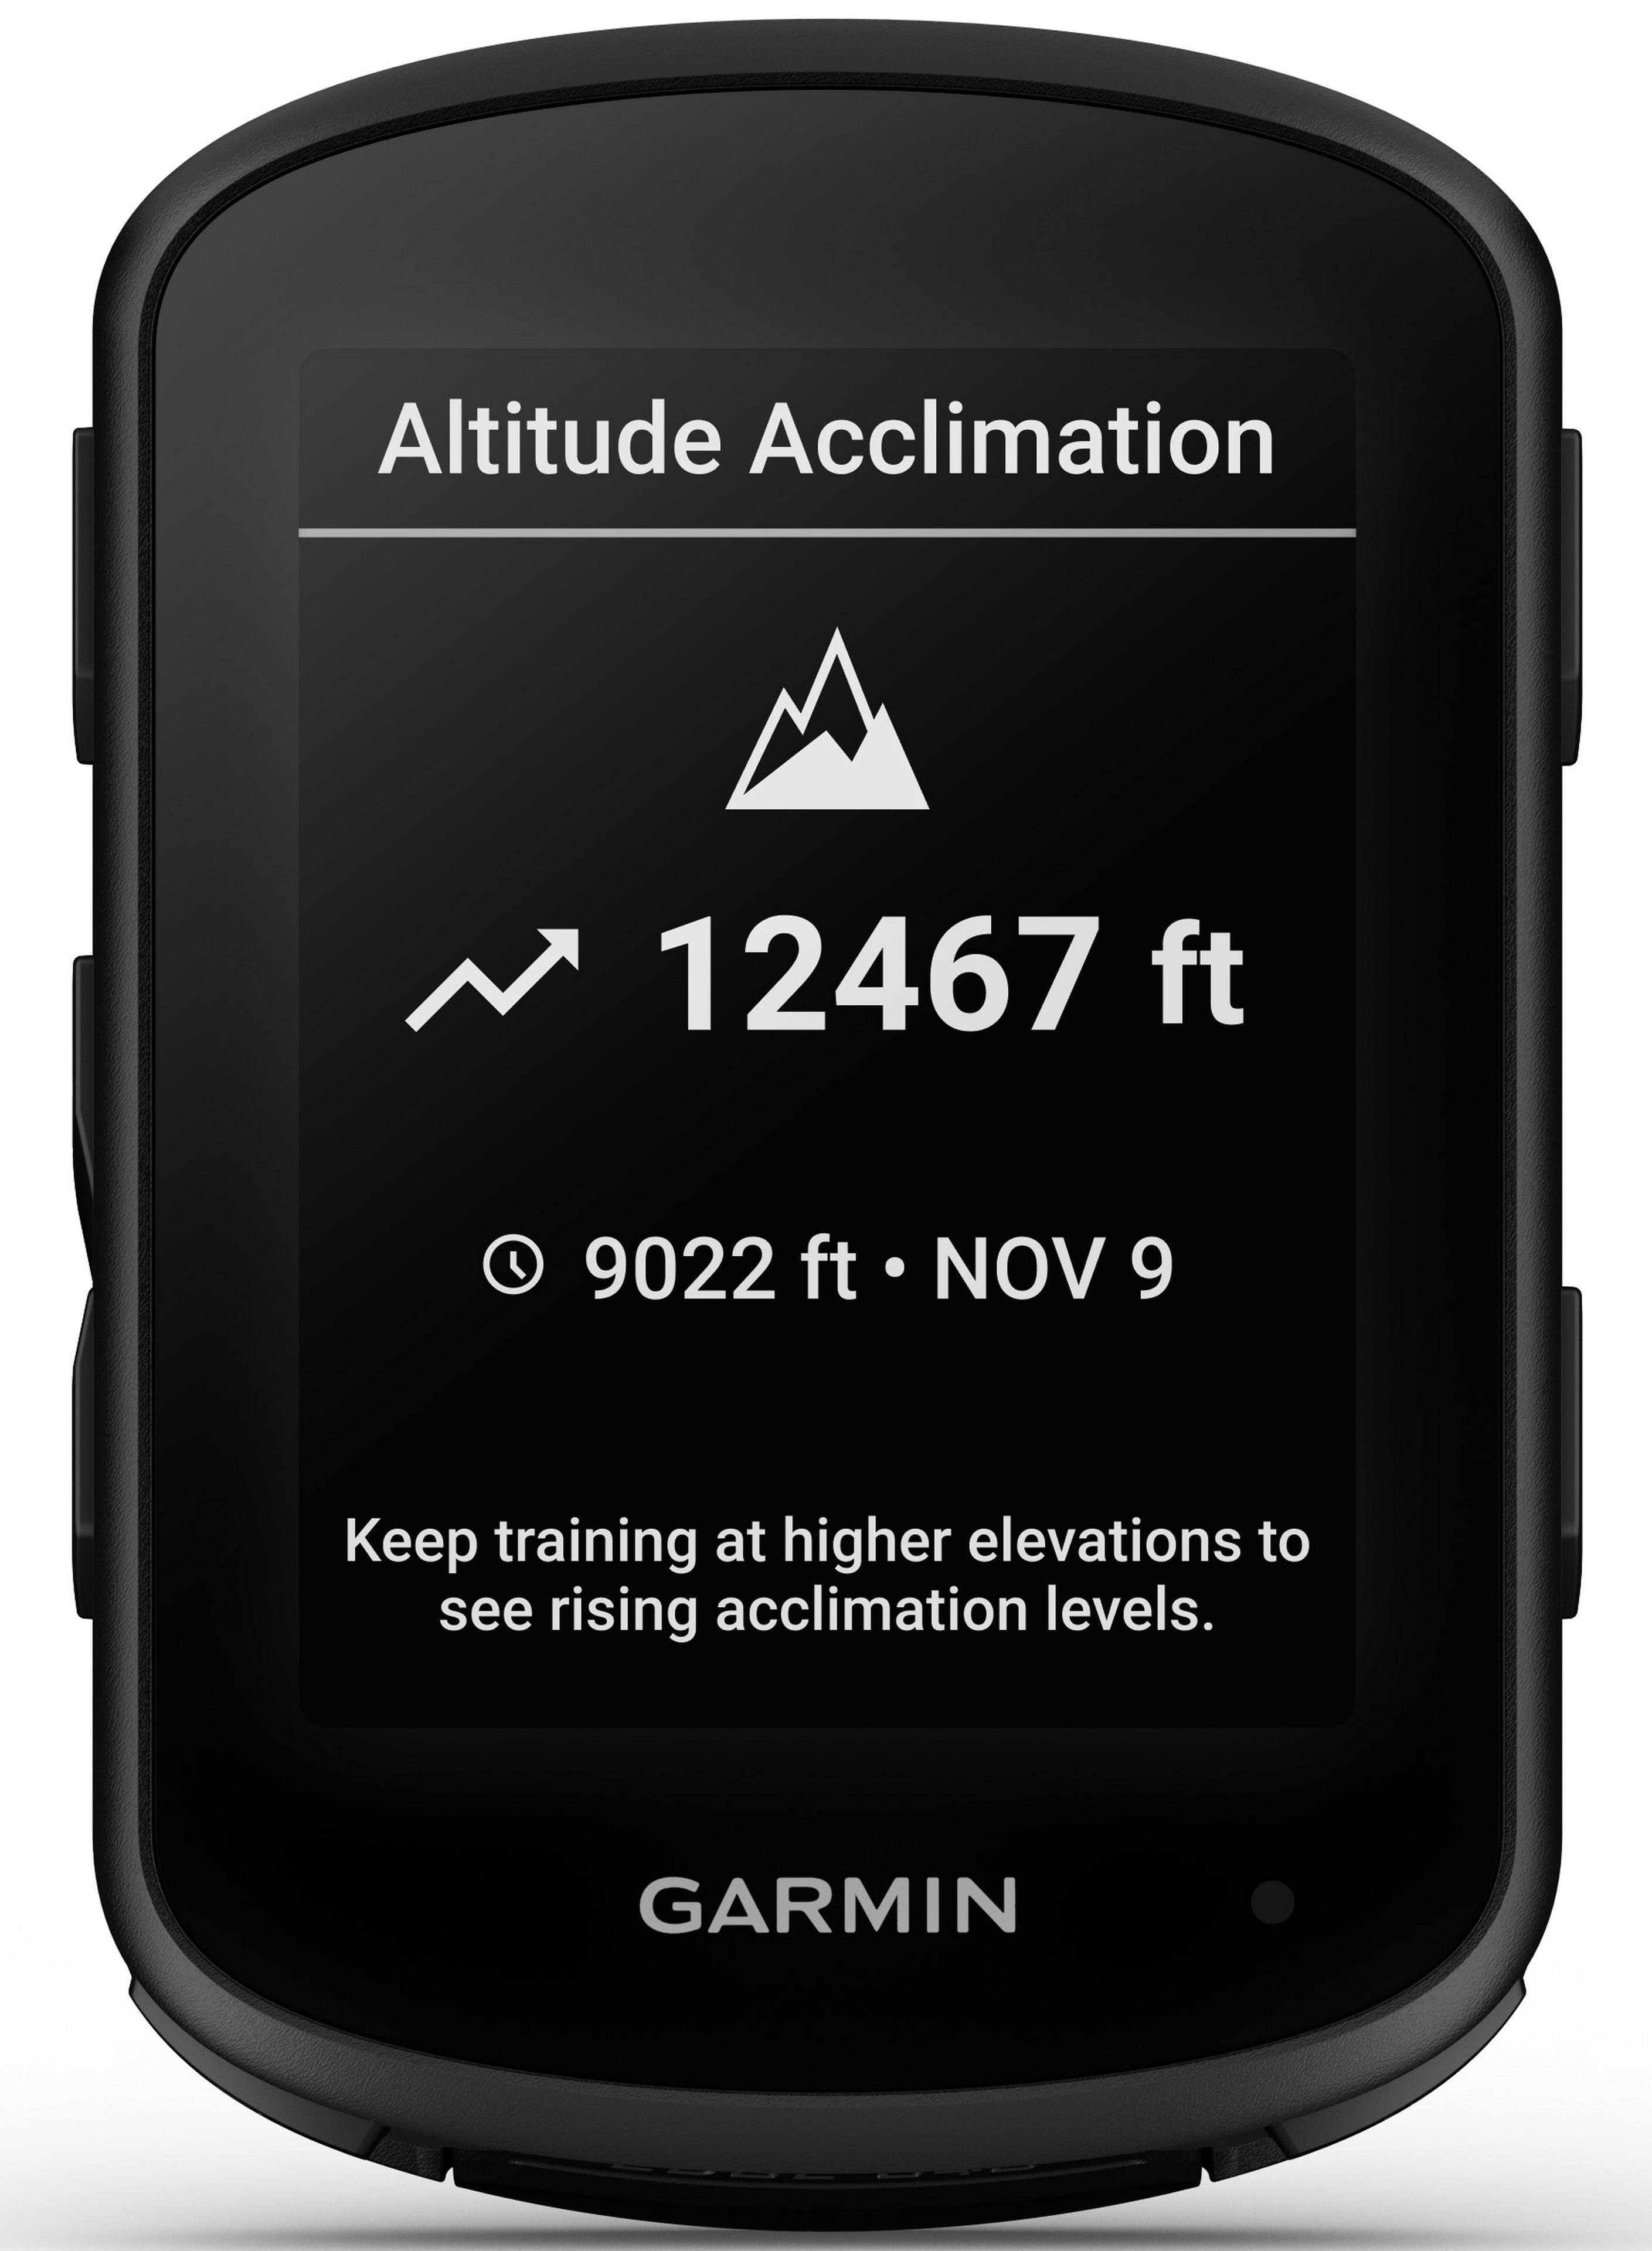 GARMIN (GB), Bike GPS Computer